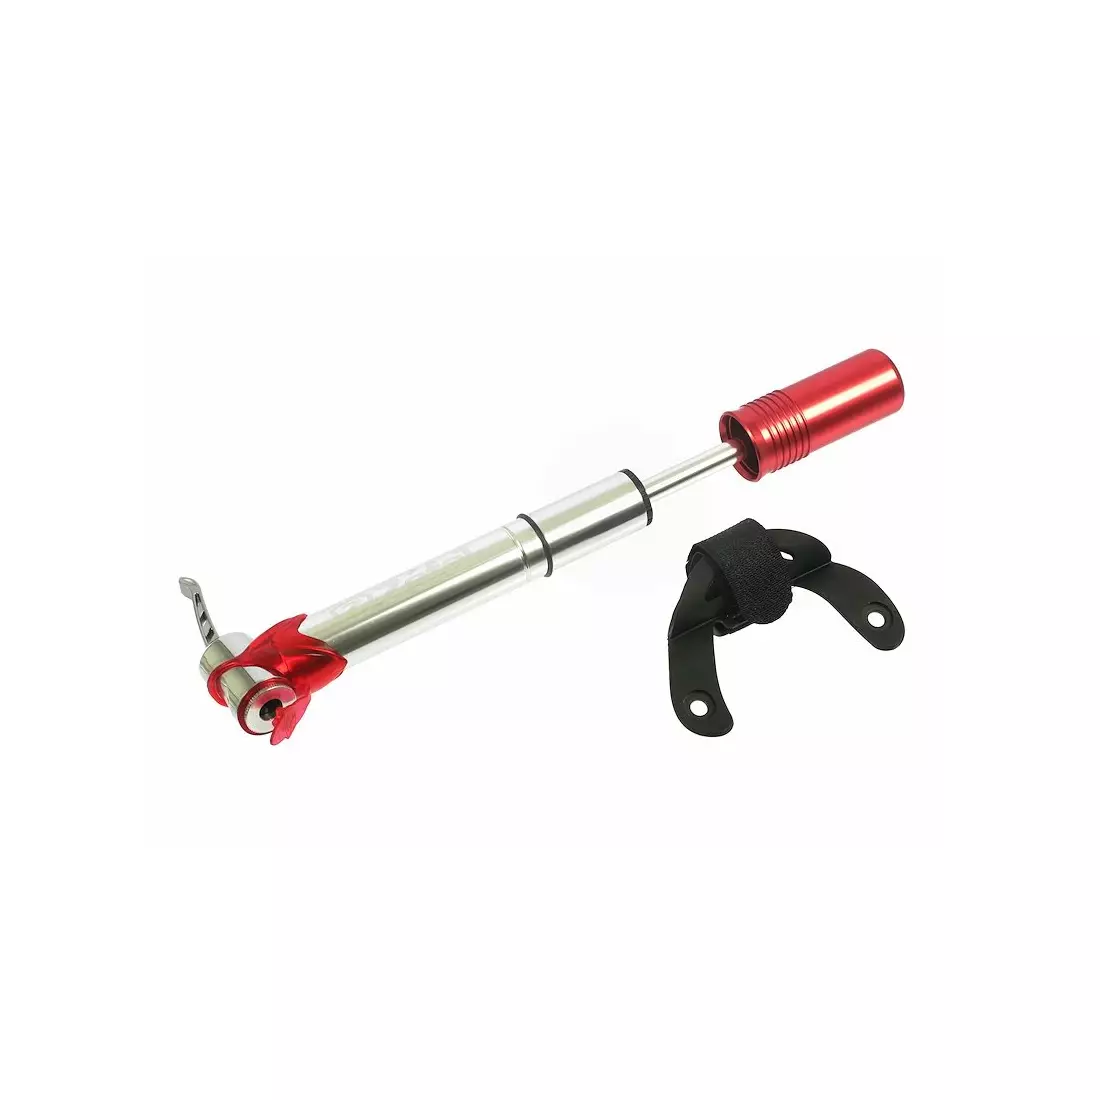 ZEFAL Air Profil MICRO bicycle pump. Red